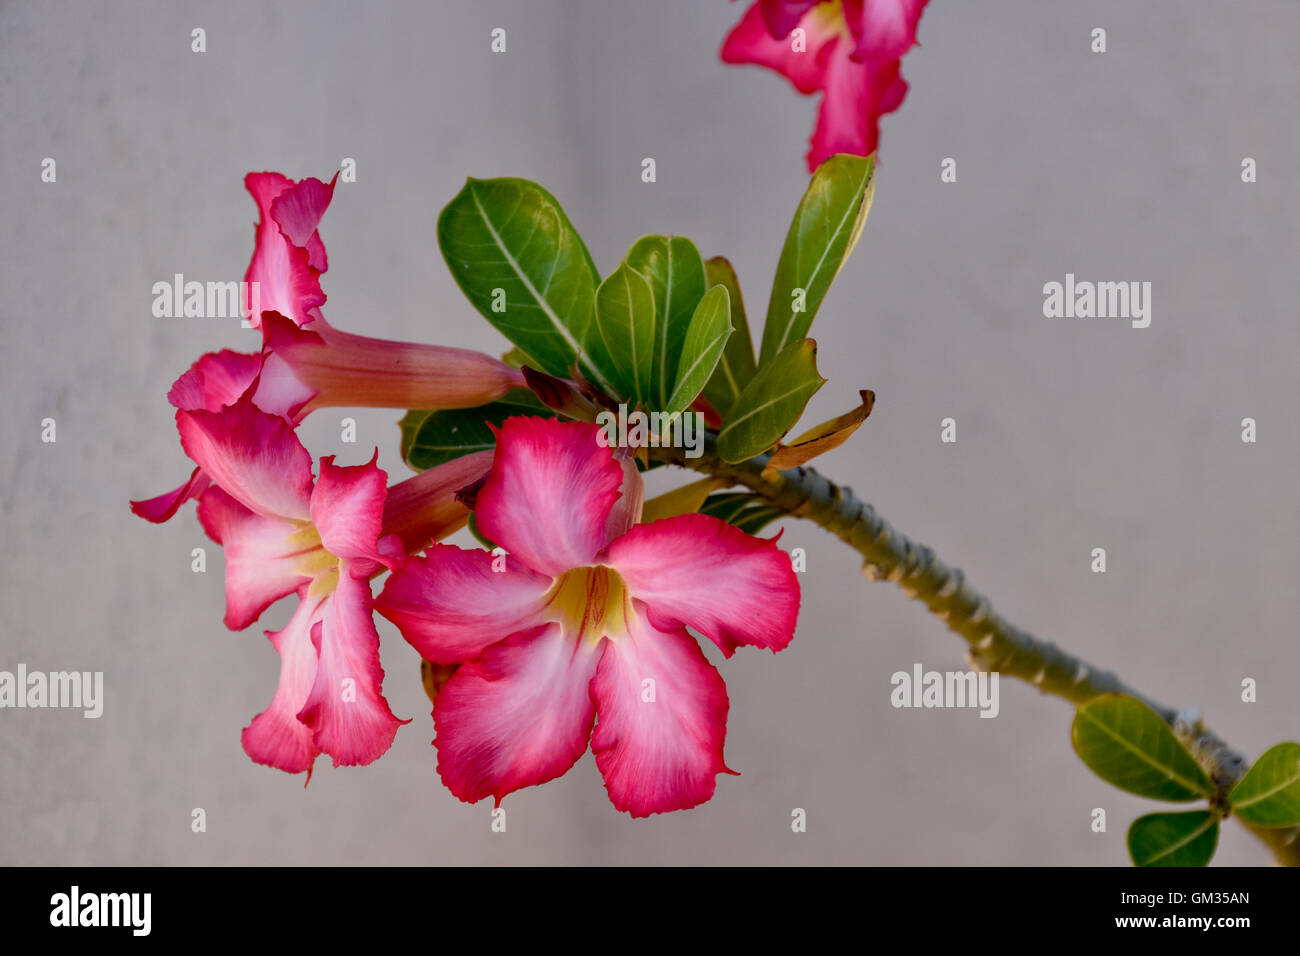 Desert Rose plant, Acapulco, Mexico. Adenium obesum is a genus of flowering plants in the Apocynum family, Apocynaceae. Stock Photo